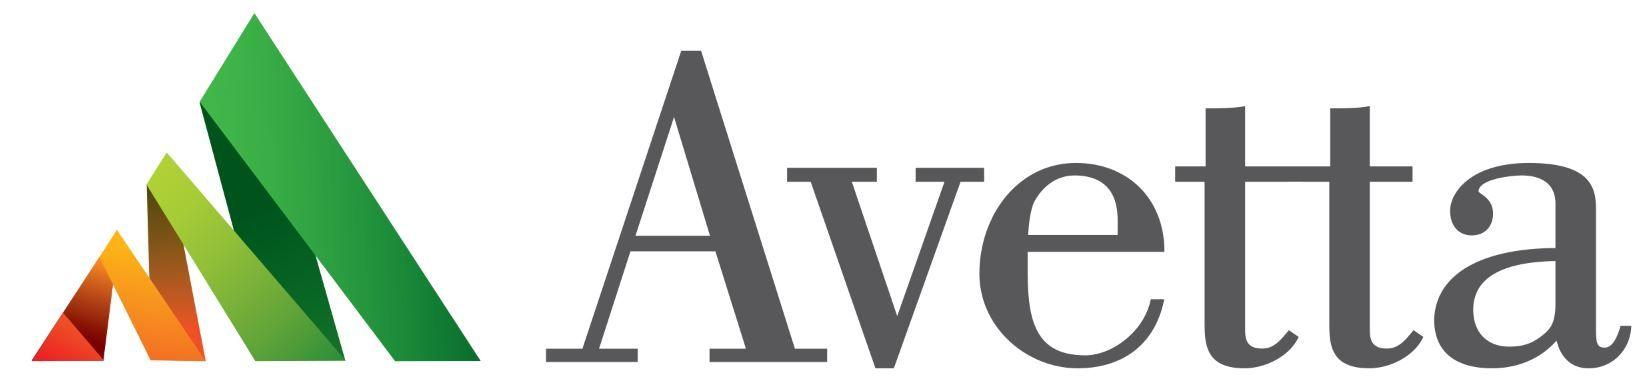 Avetta Logo - Avetta Logo Mechanical Heating, Ventilation And Air Conditioning